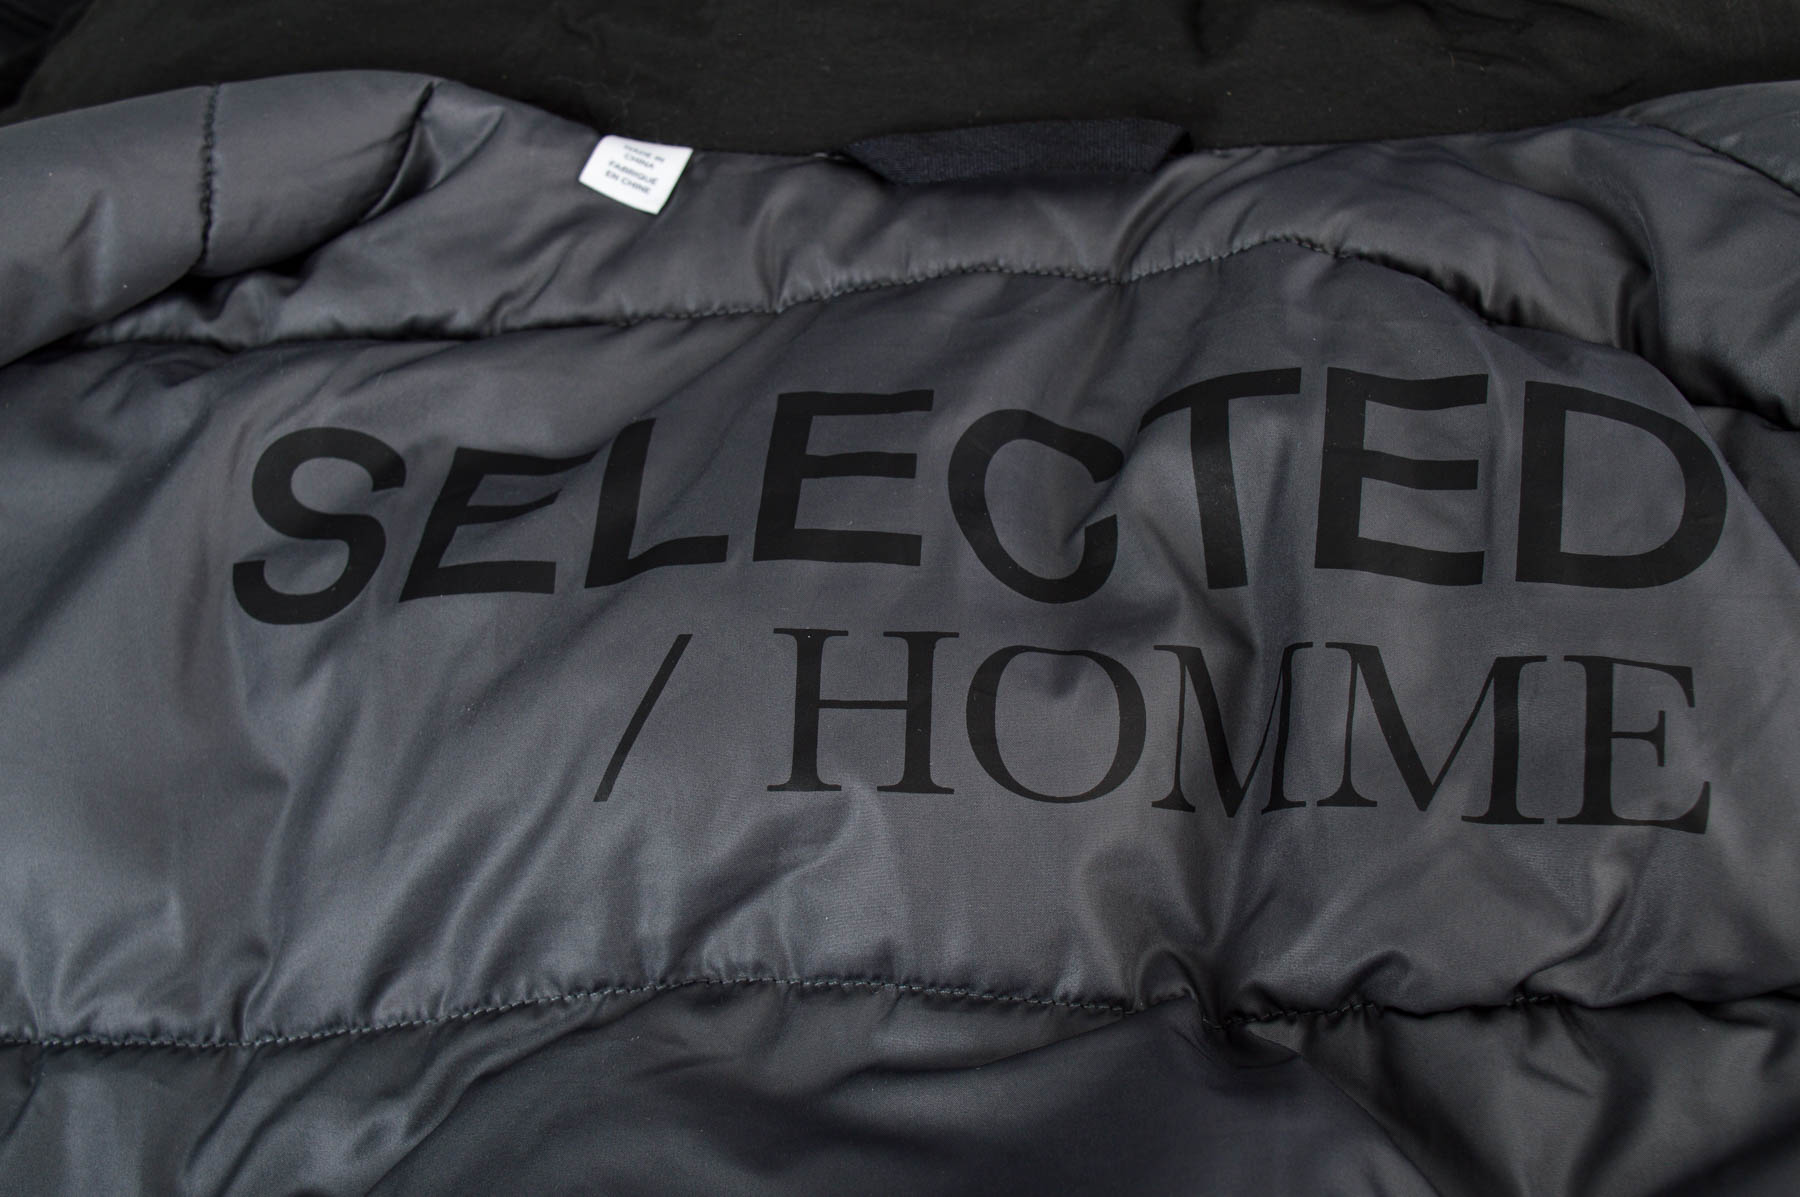 Men's jacket - SELECTED / HOMME - 2